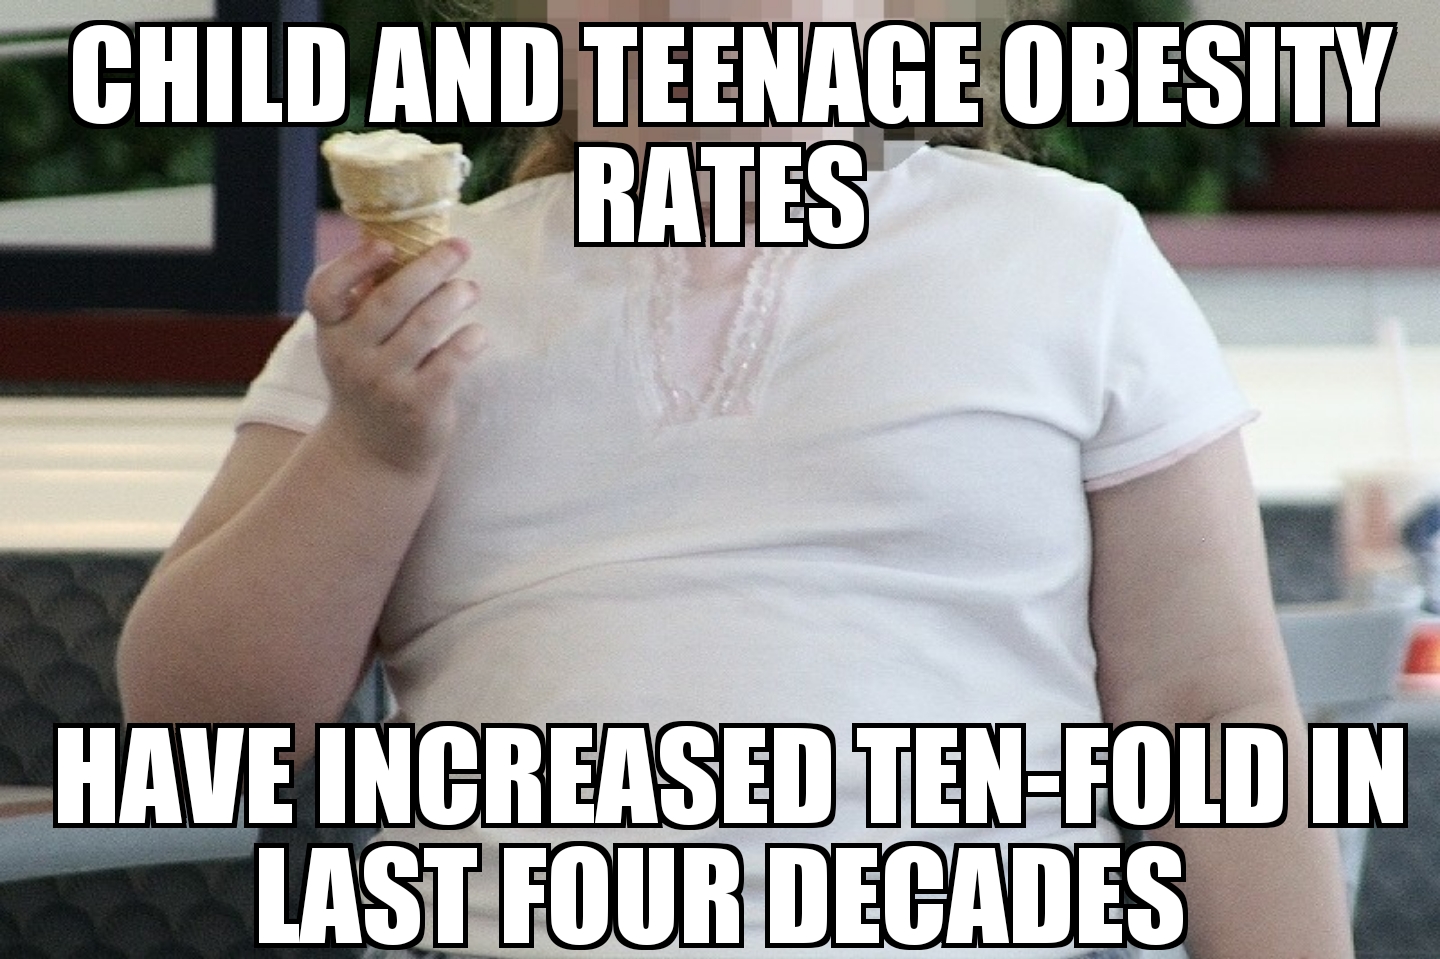 Child, teen obesity up